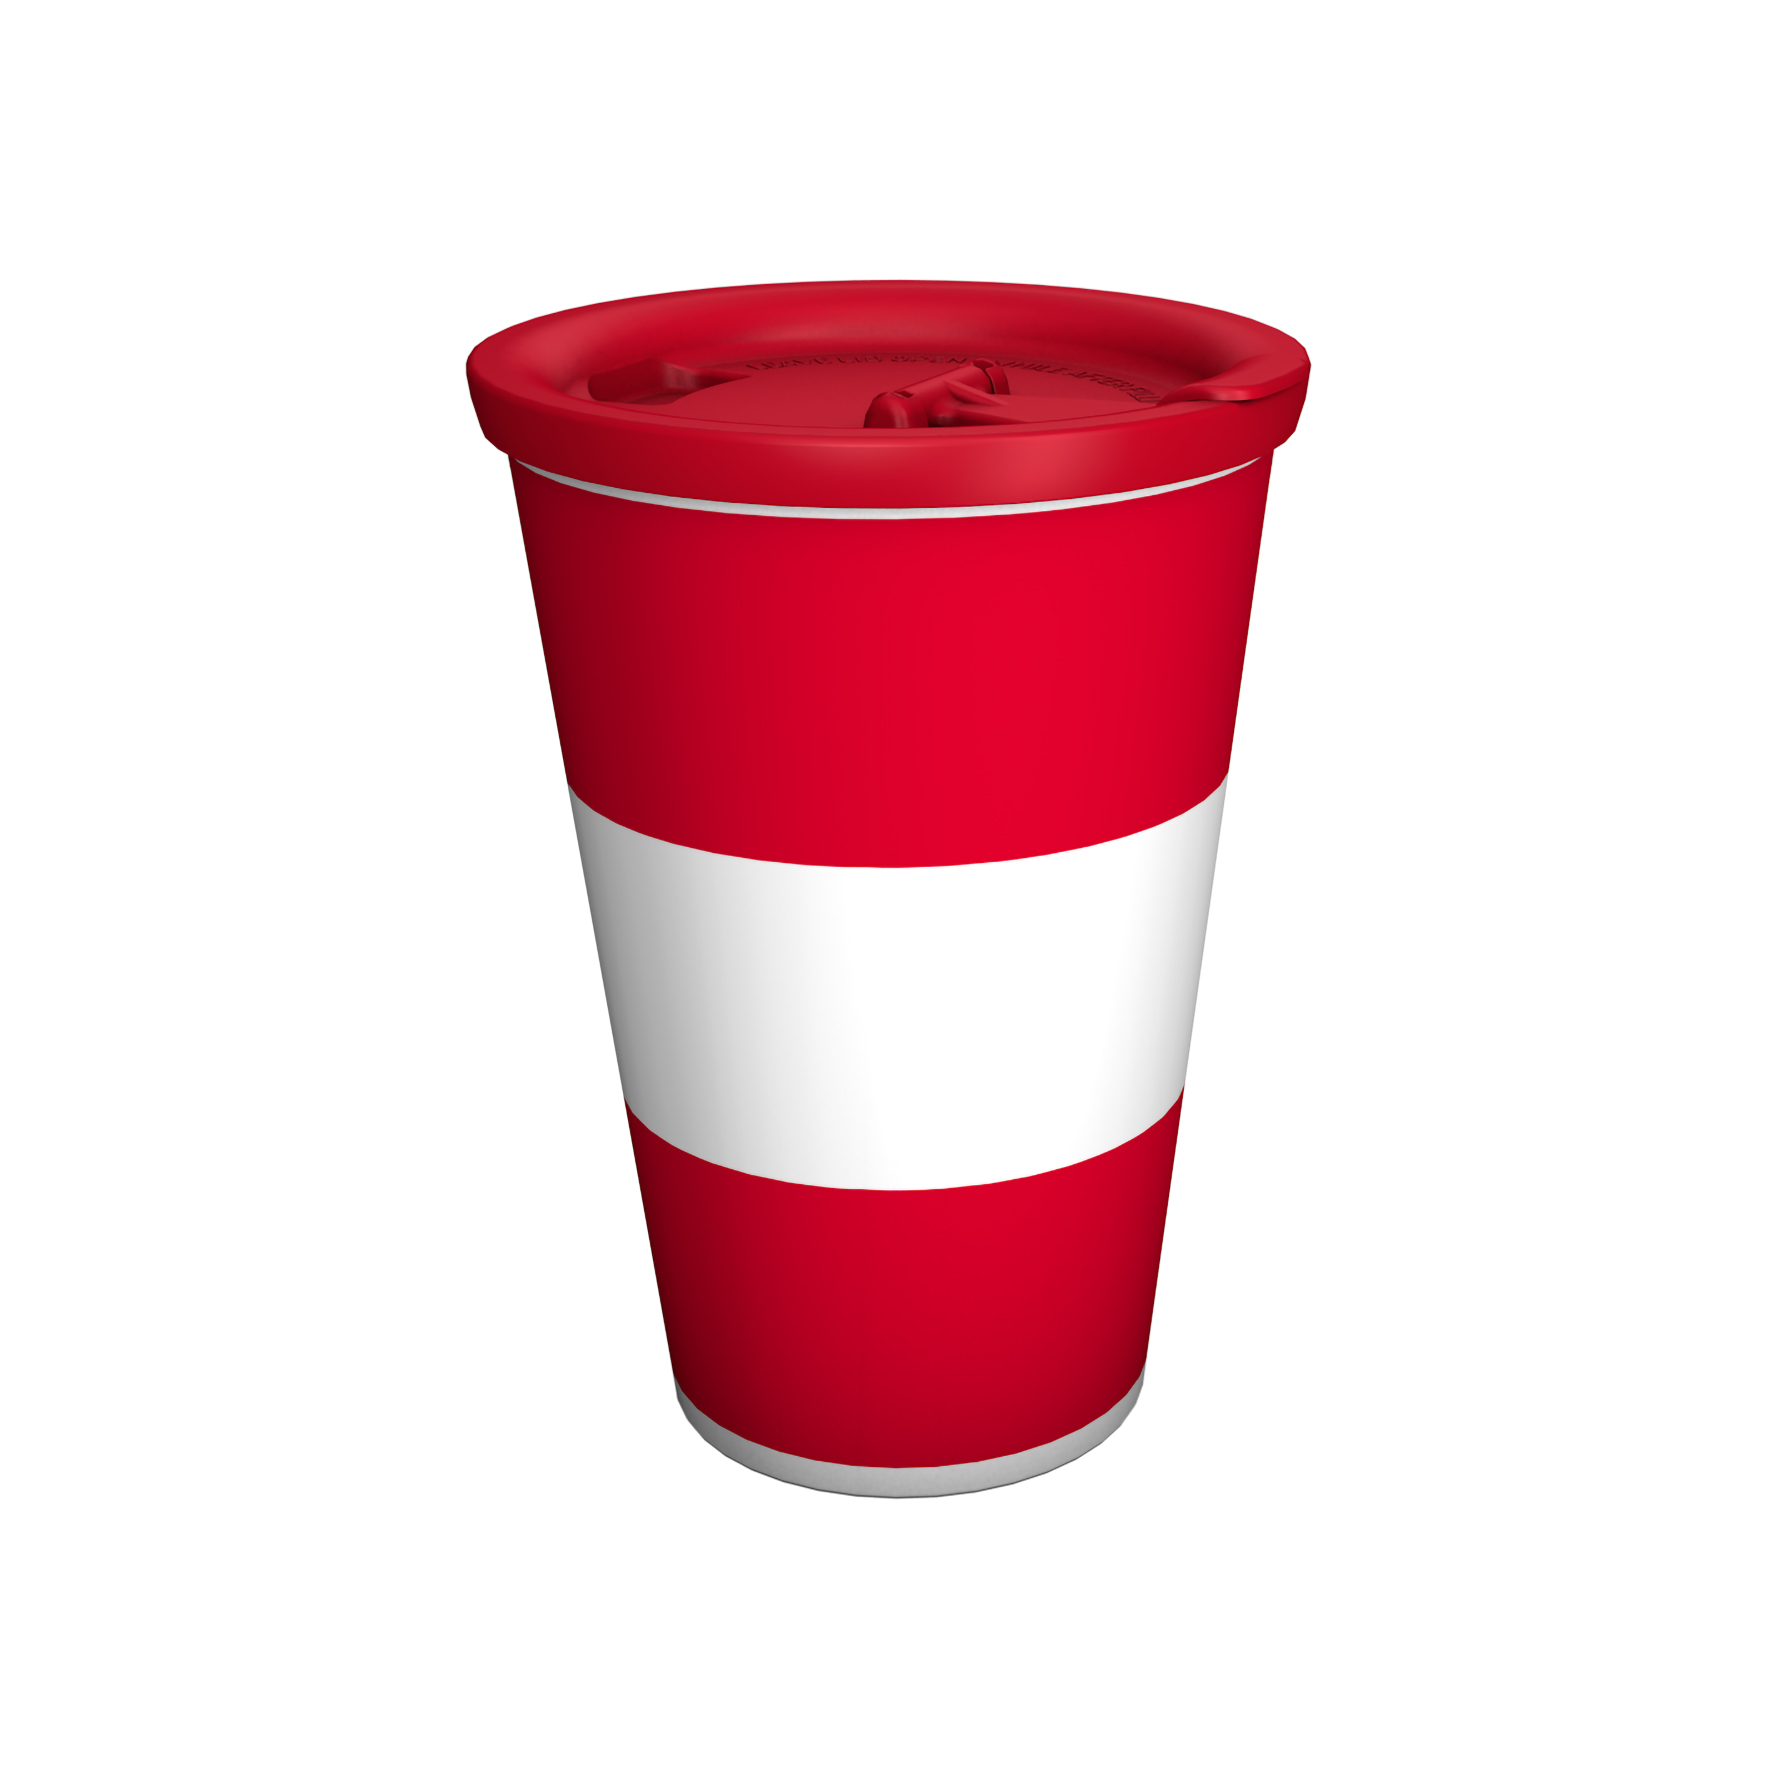 Coffee 2GO-Mug Country-Edition with lid